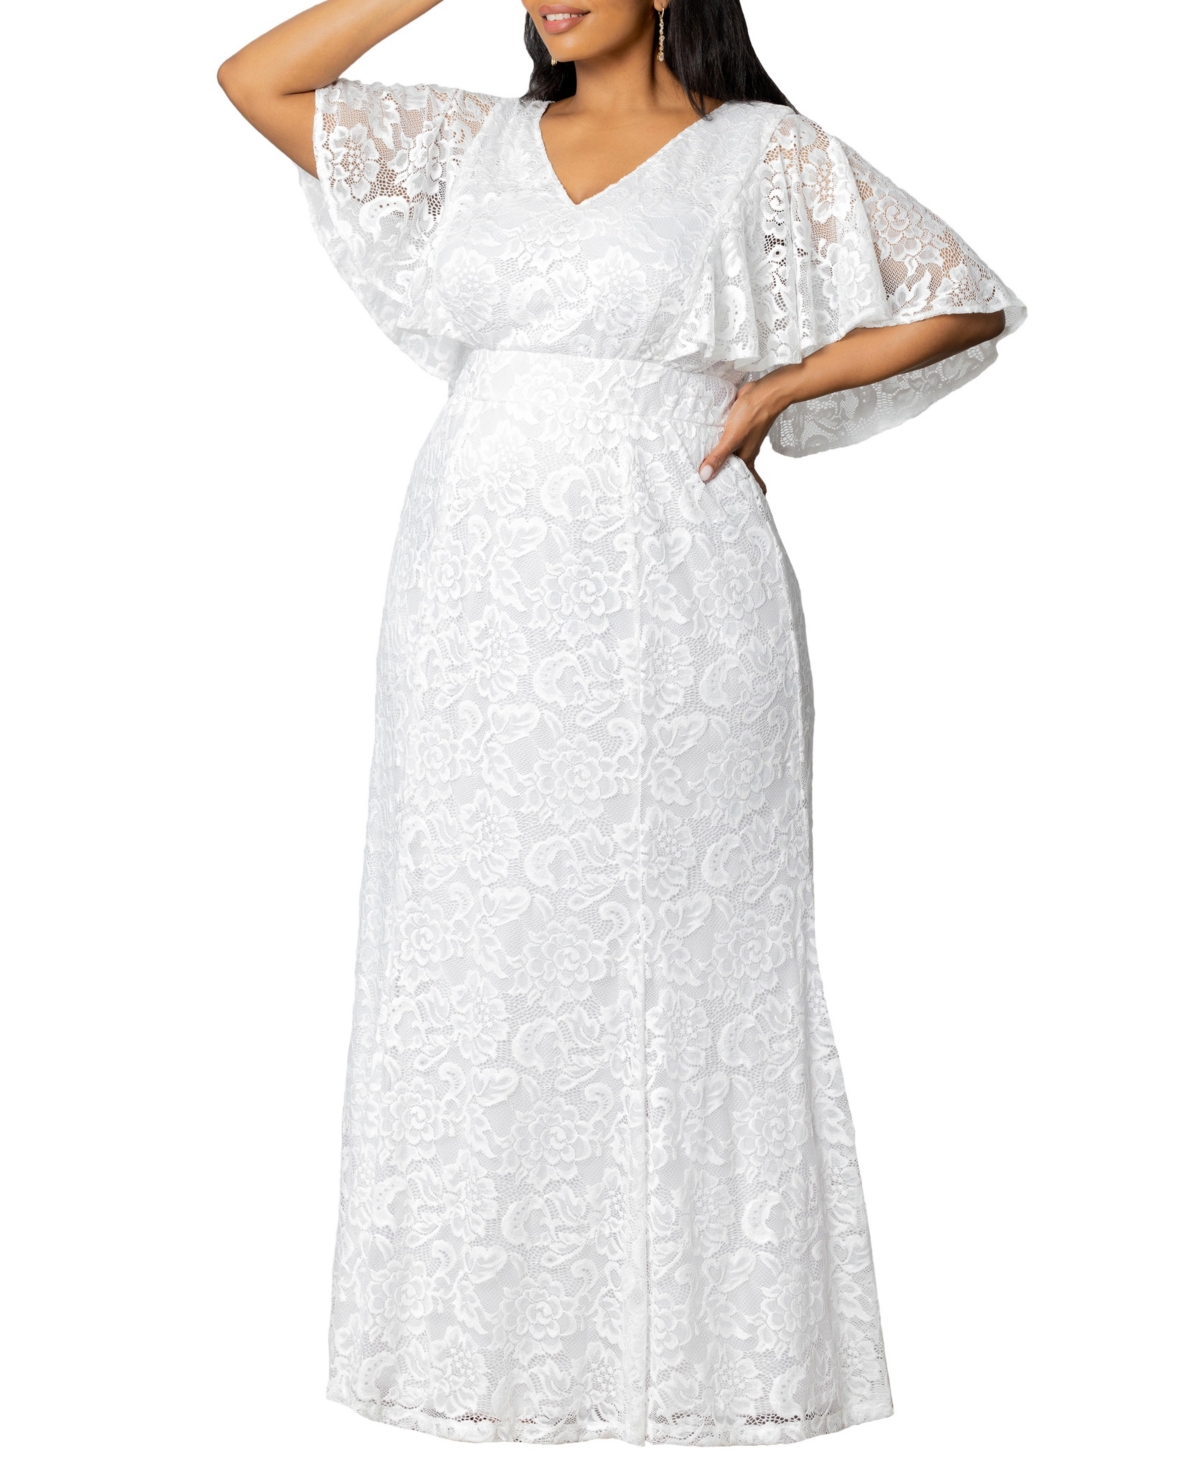 1930s Style Wedding Dresses | Art Deco Wedding Dress Womens Plus size Clarissa Lace Wedding Gown - Pearl $388.00 AT vintagedancer.com